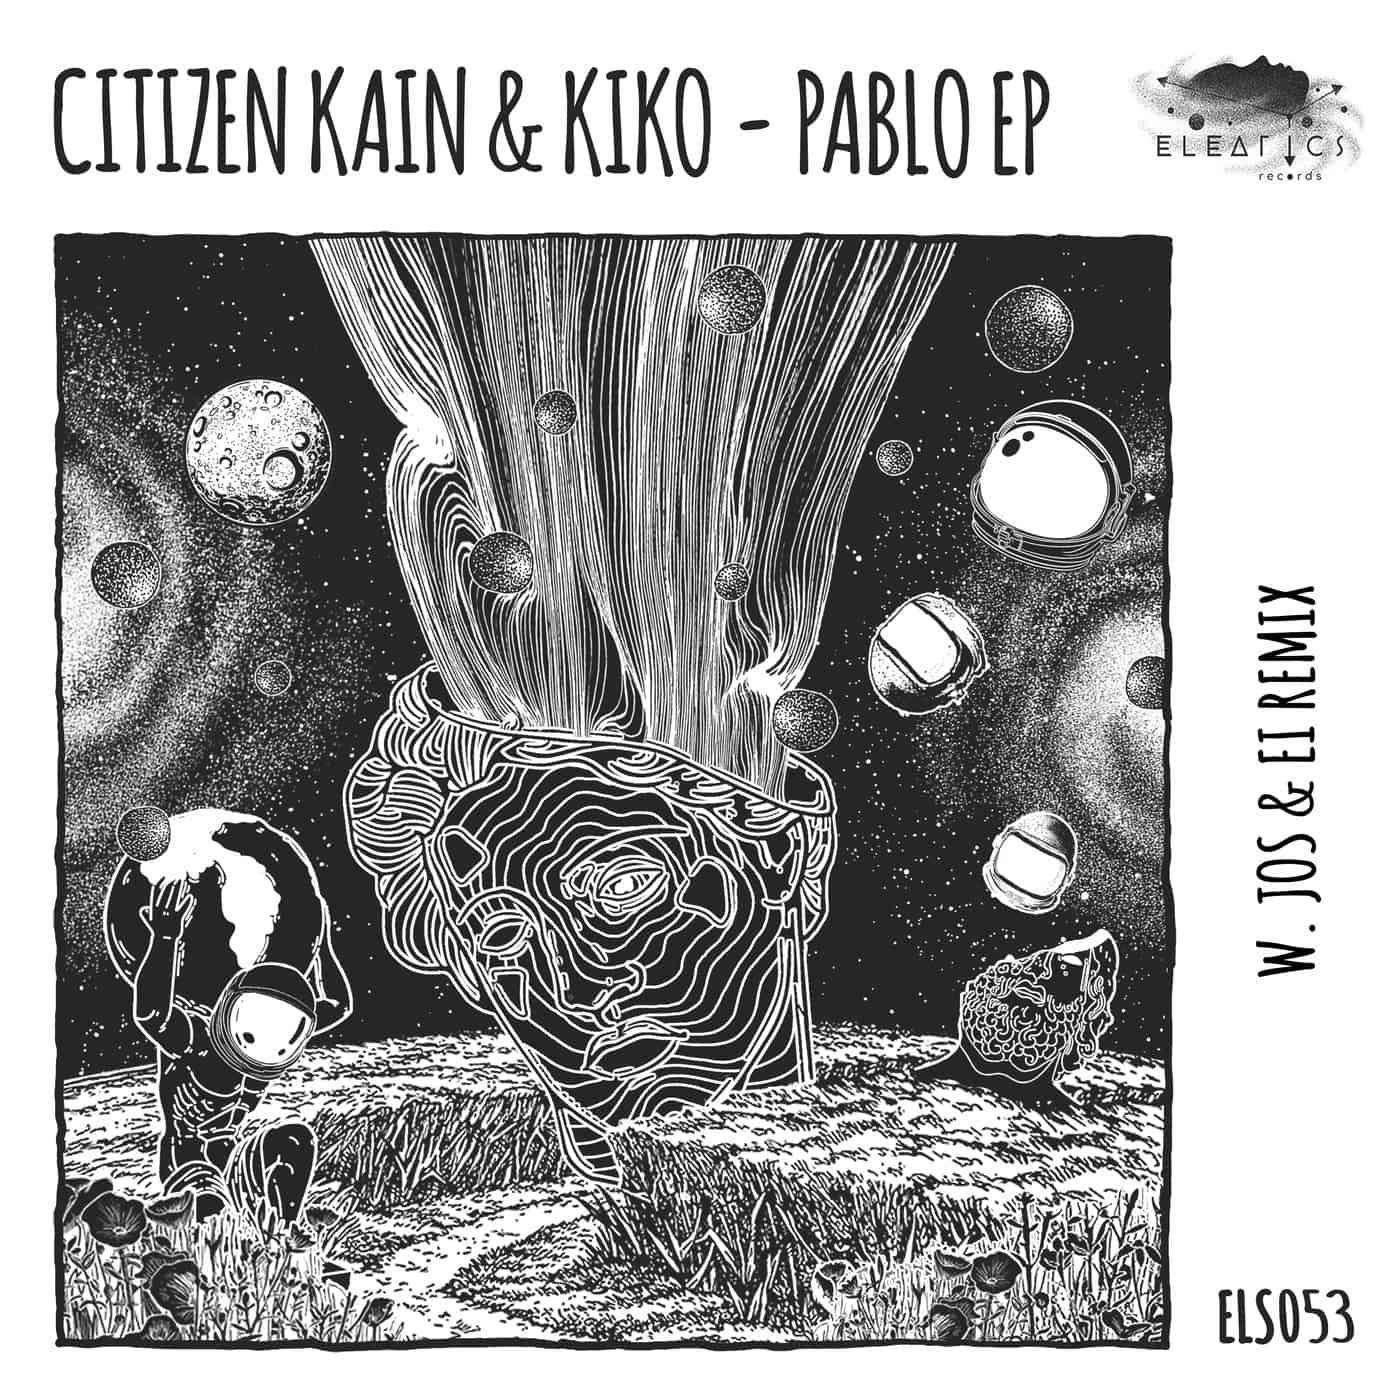 image cover: Kiko, Citizen Kain - Pablo EP / ELS053